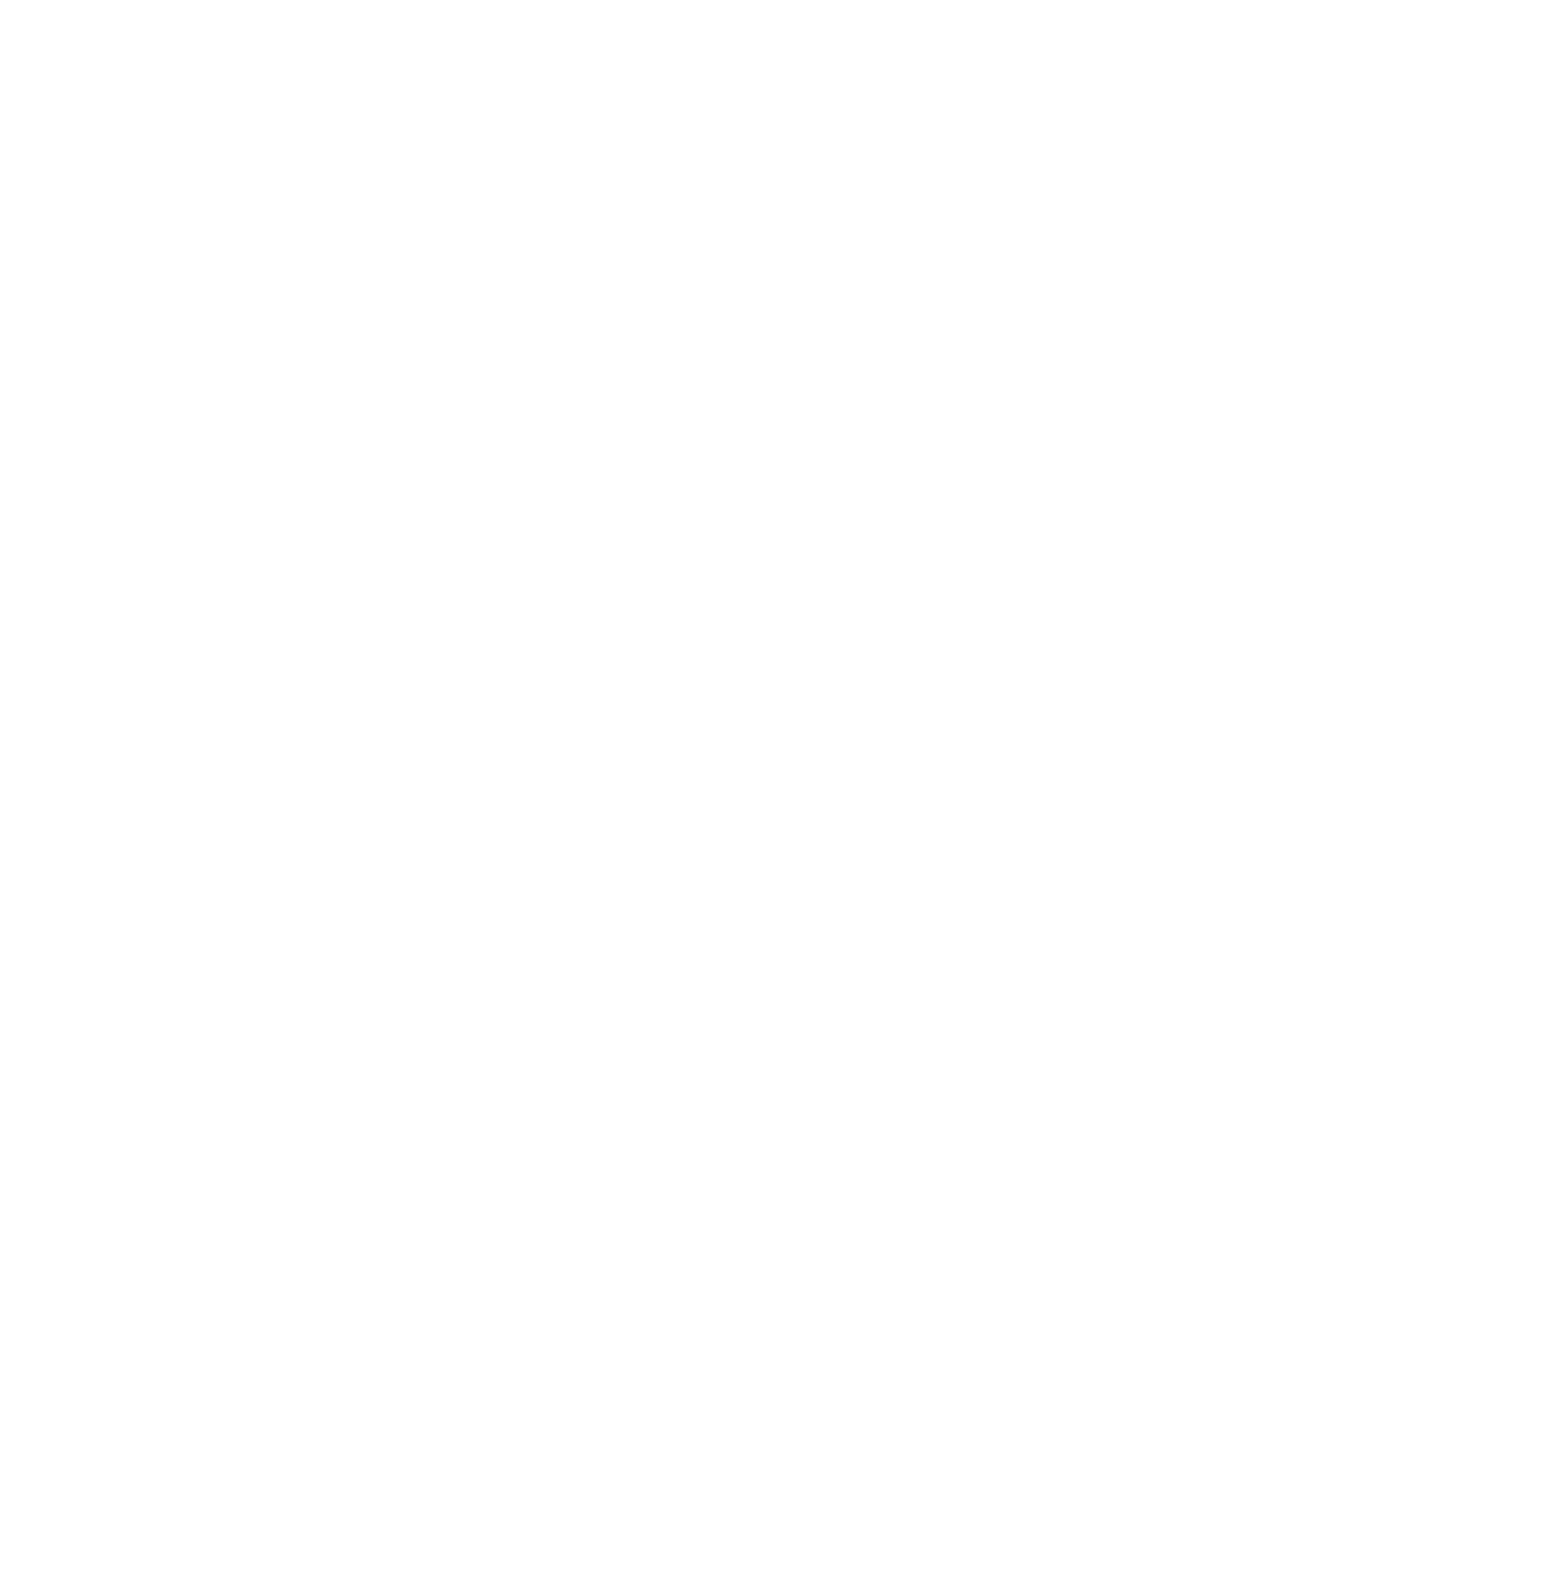 AspenTech logo for dark backgrounds (transparent PNG)